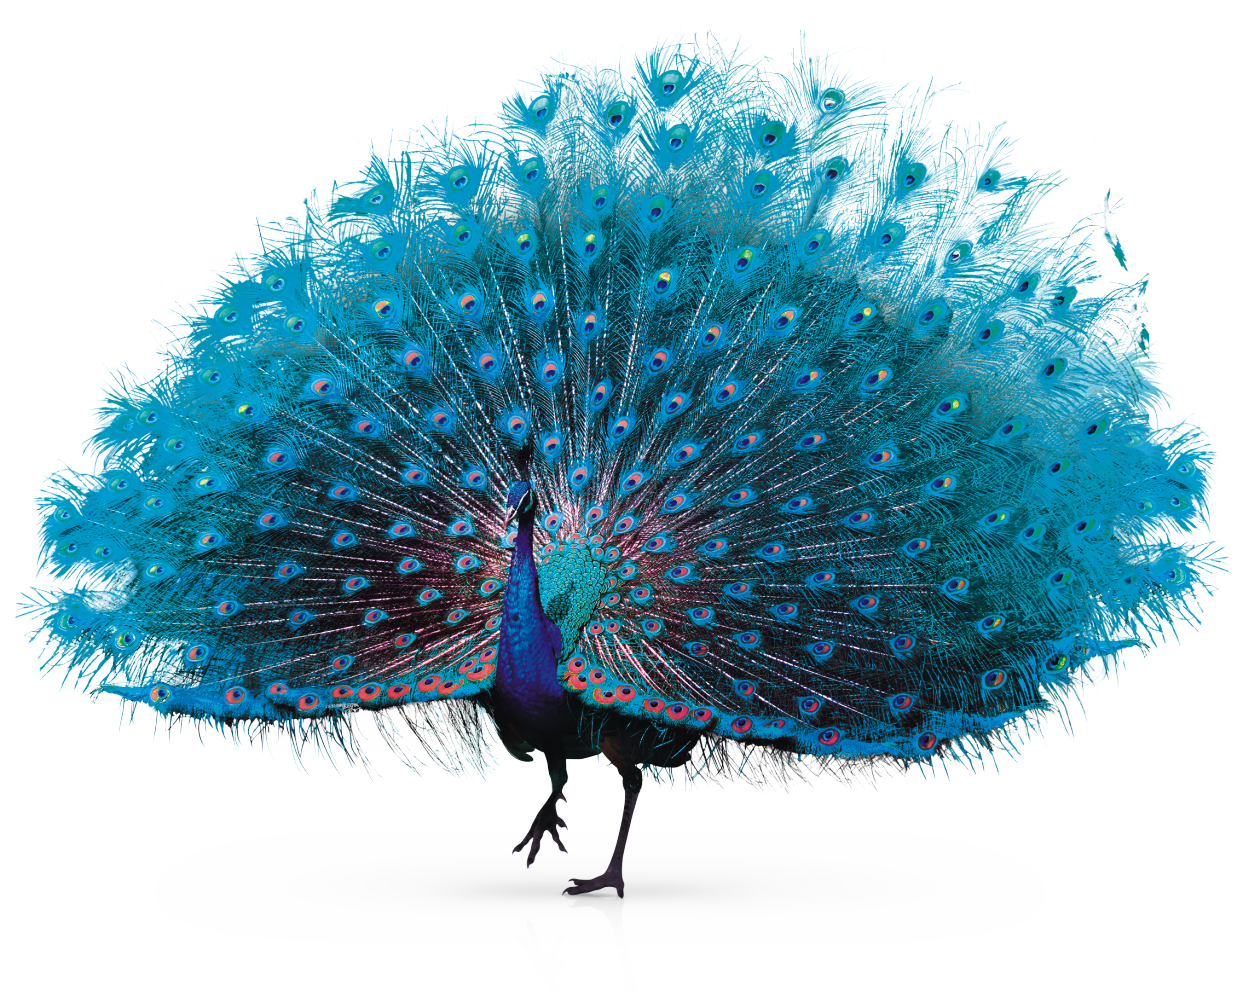 Vibrant Peacock Display PNG image